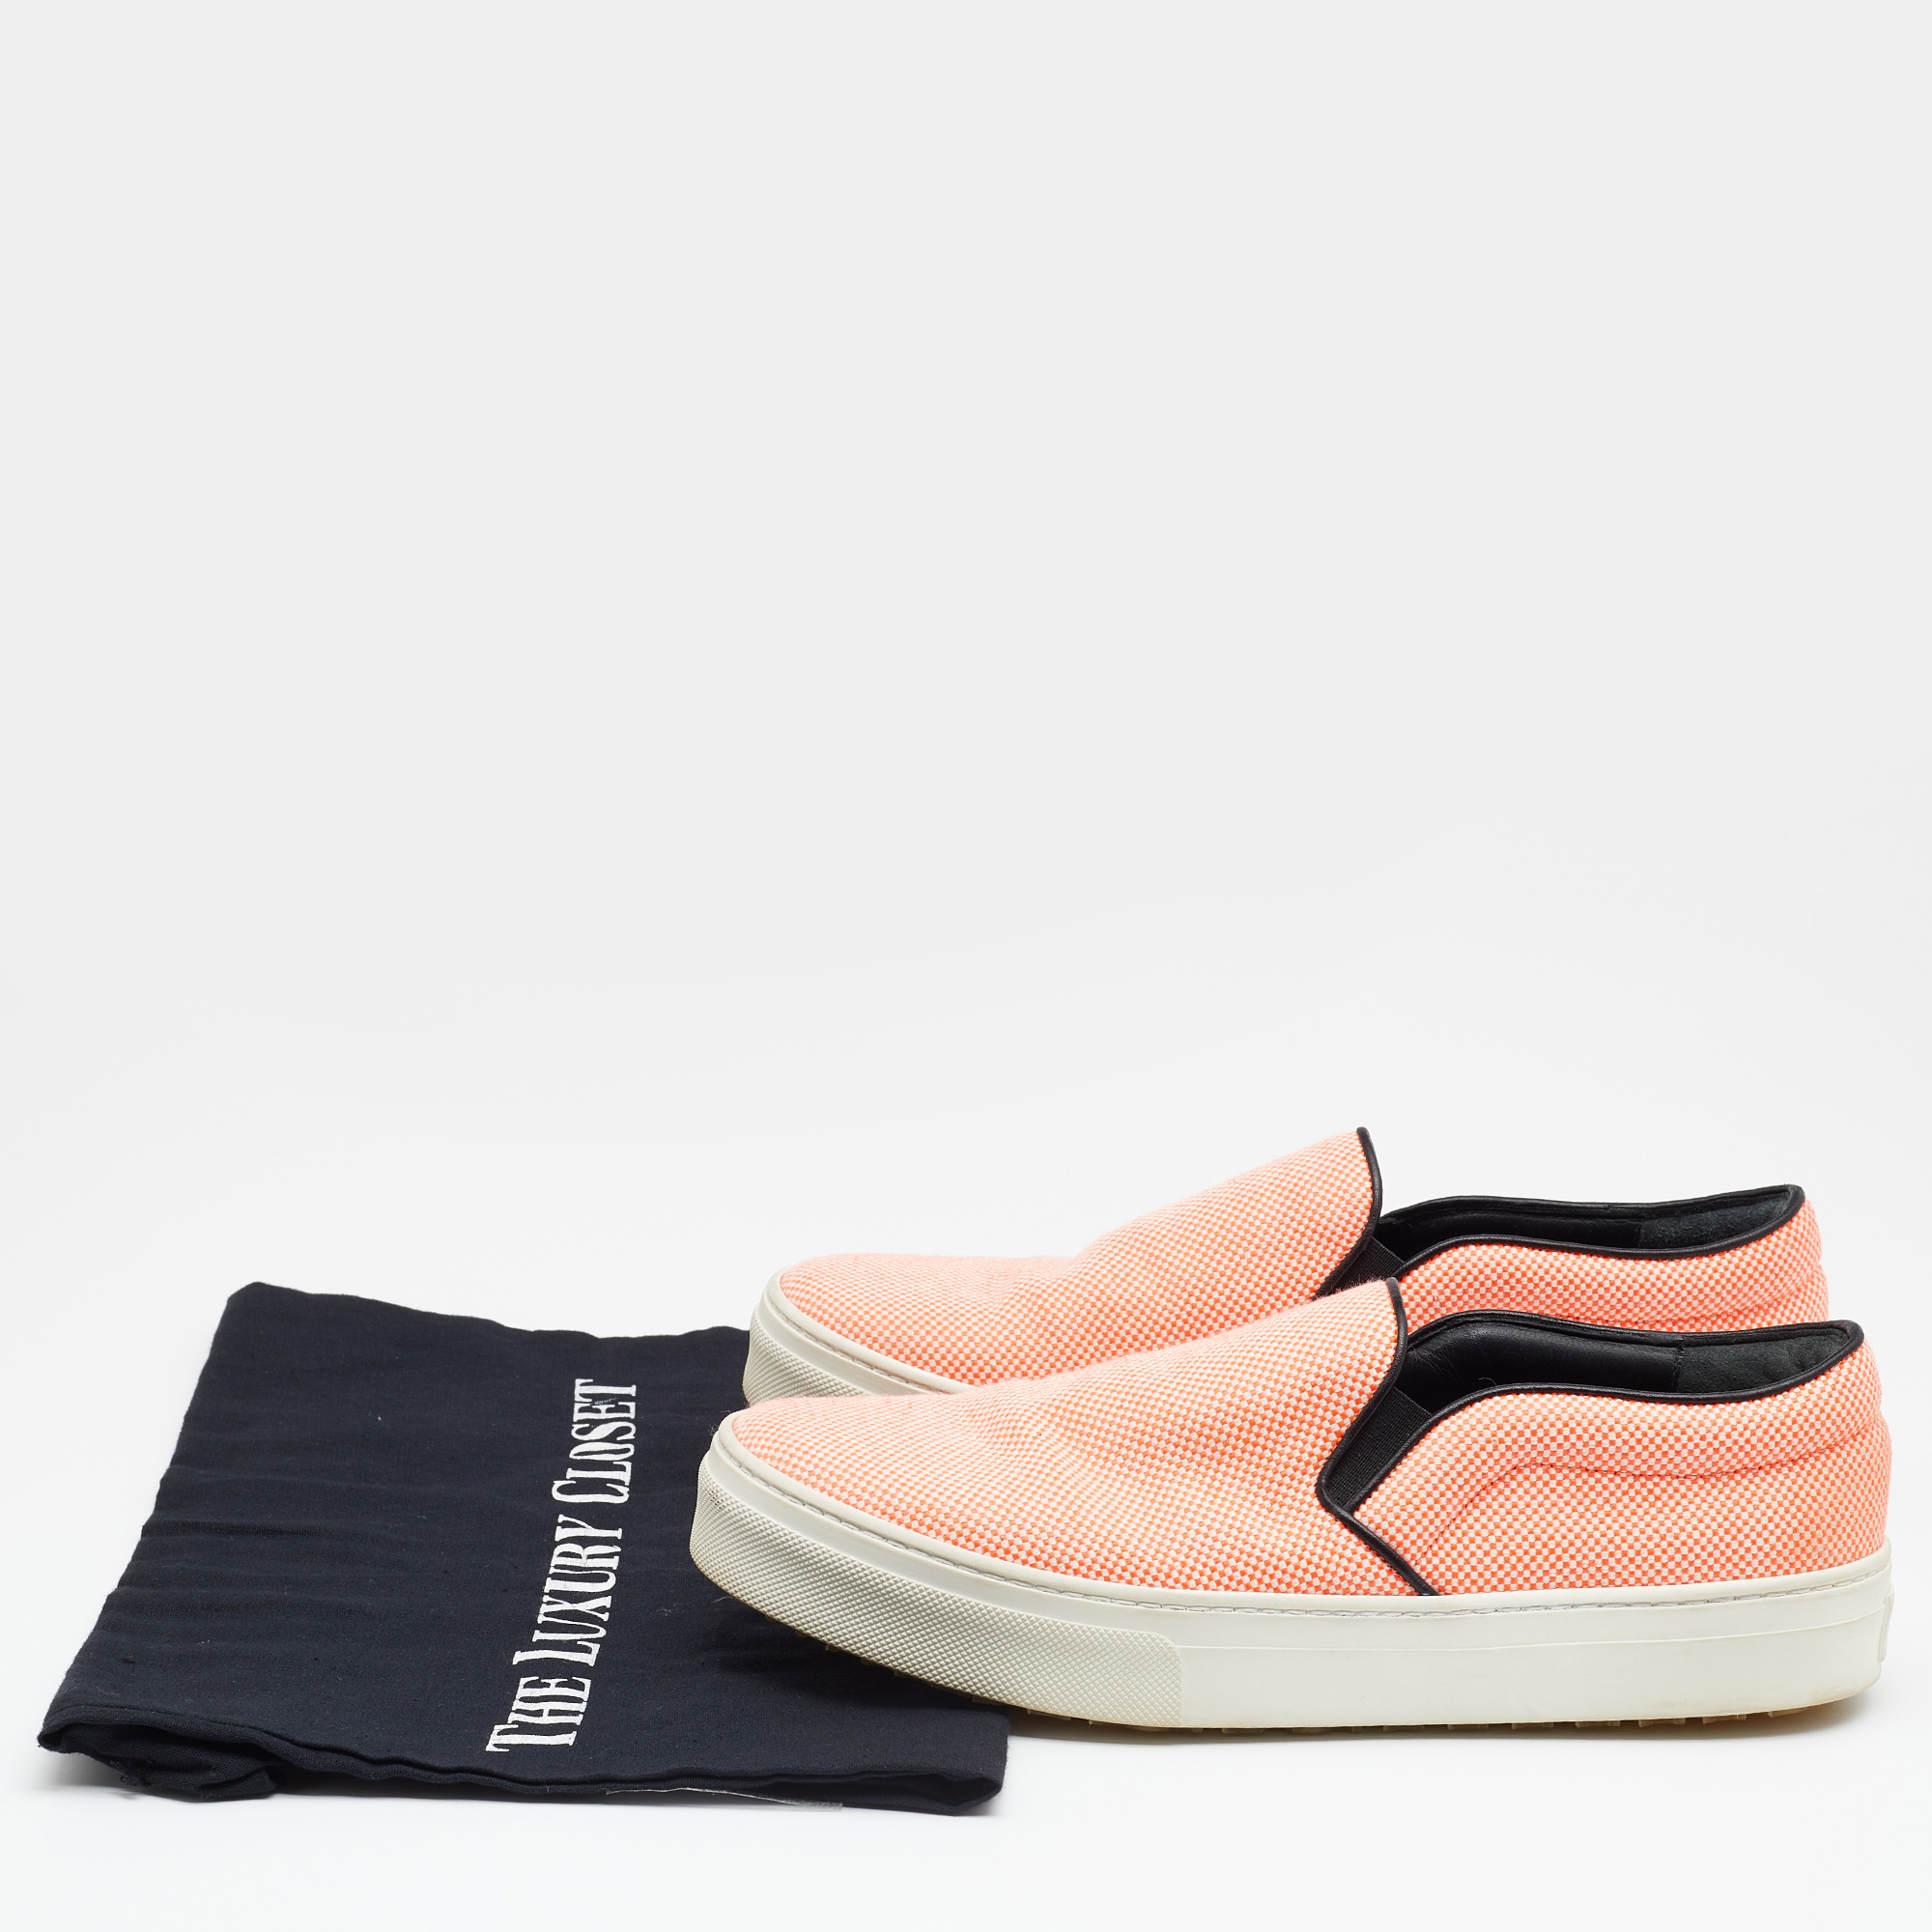 Celine Orange Canvas Slip On Sneakers Size 38